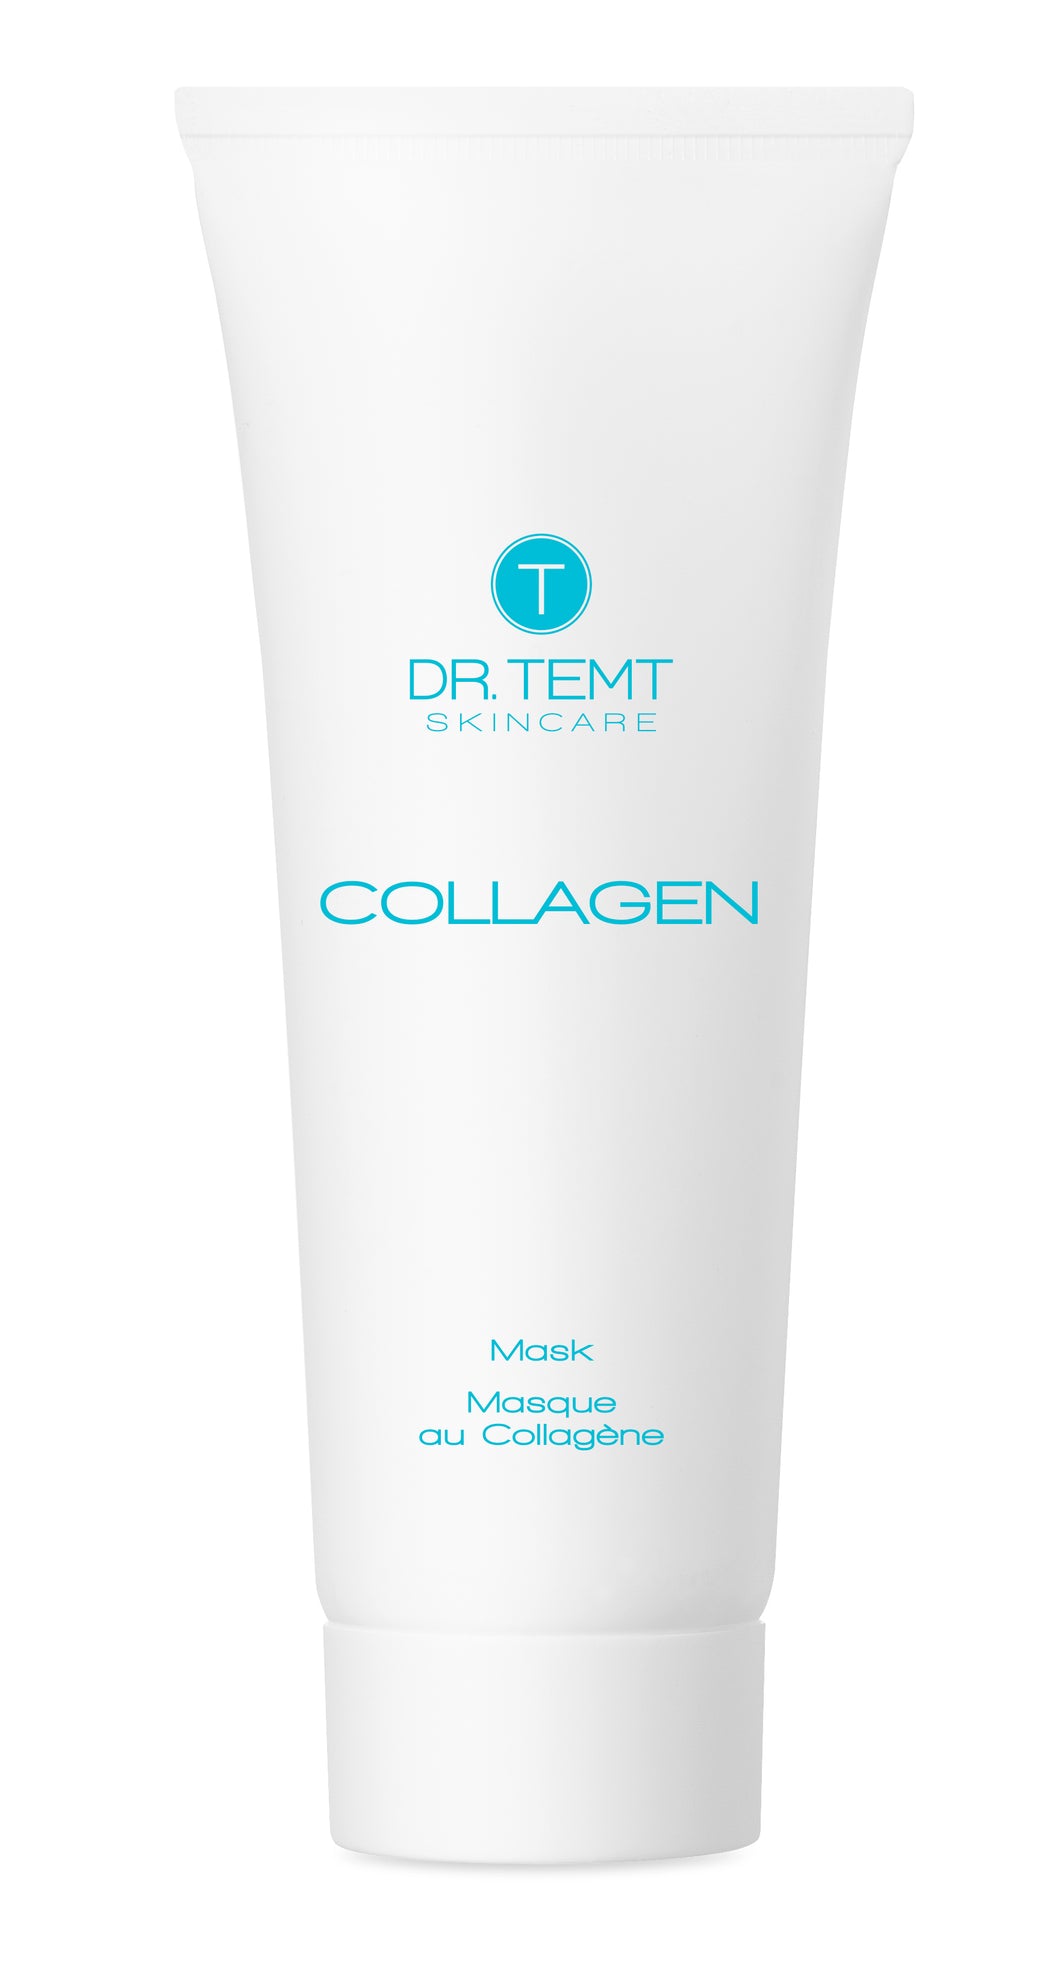 DR. TEMT Collagen Mask 250ml